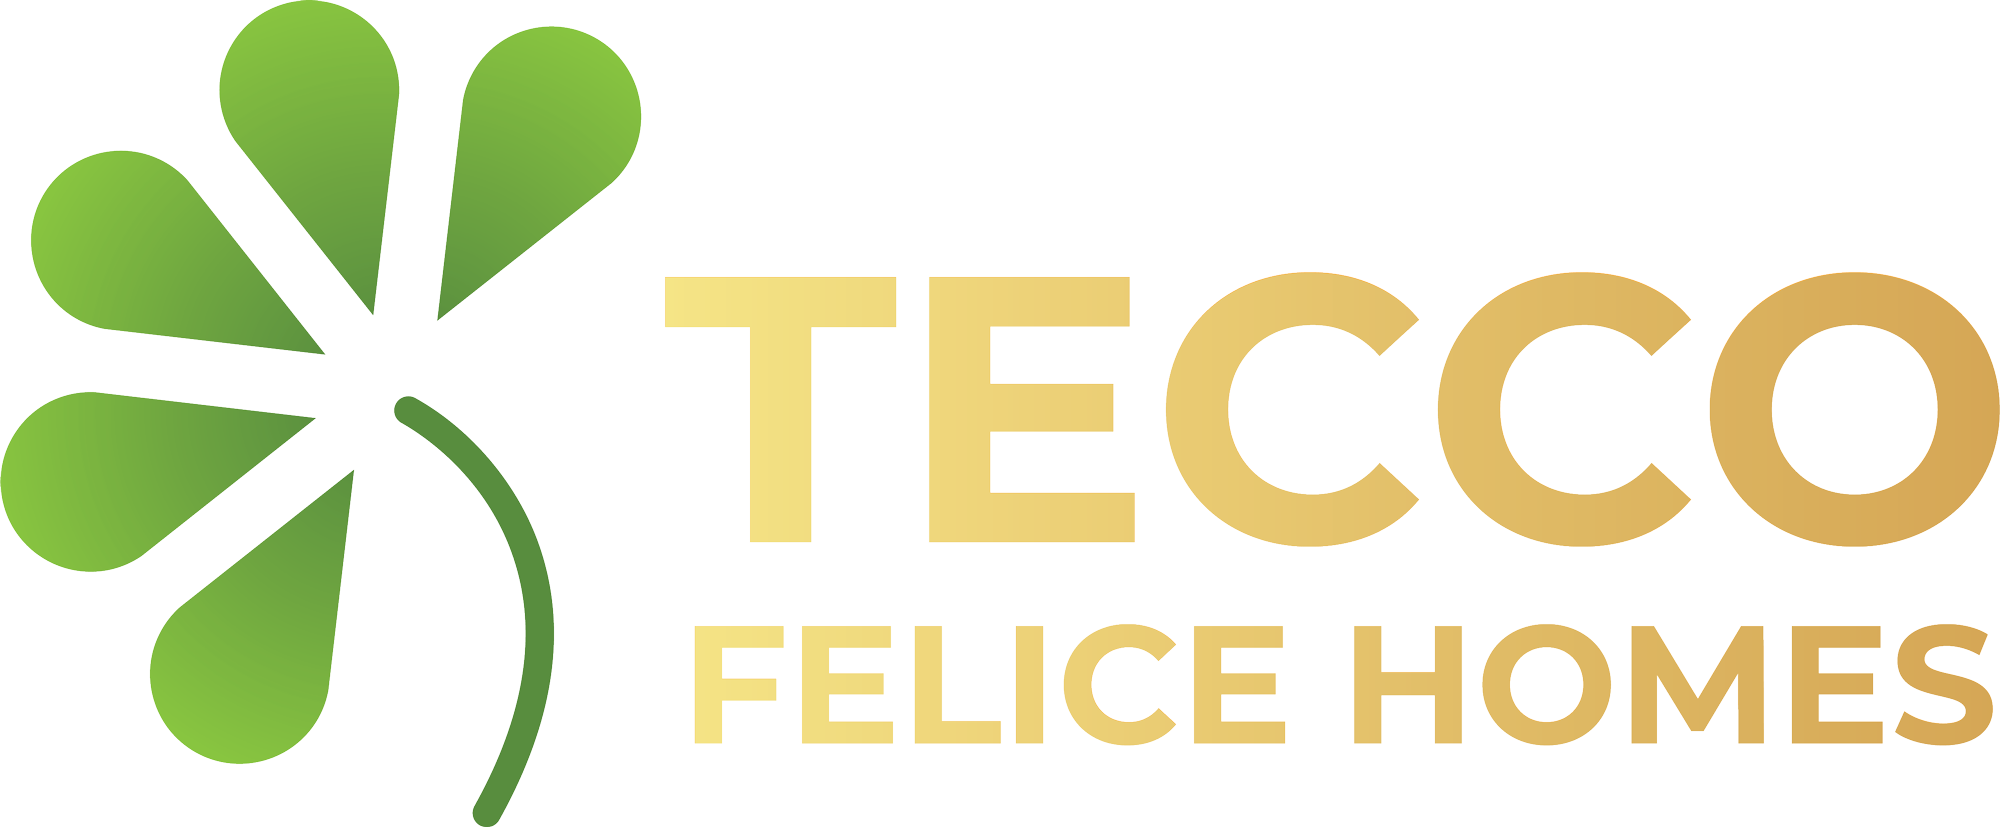 logo-Tecco-Felice-Homes-Bình-Dương